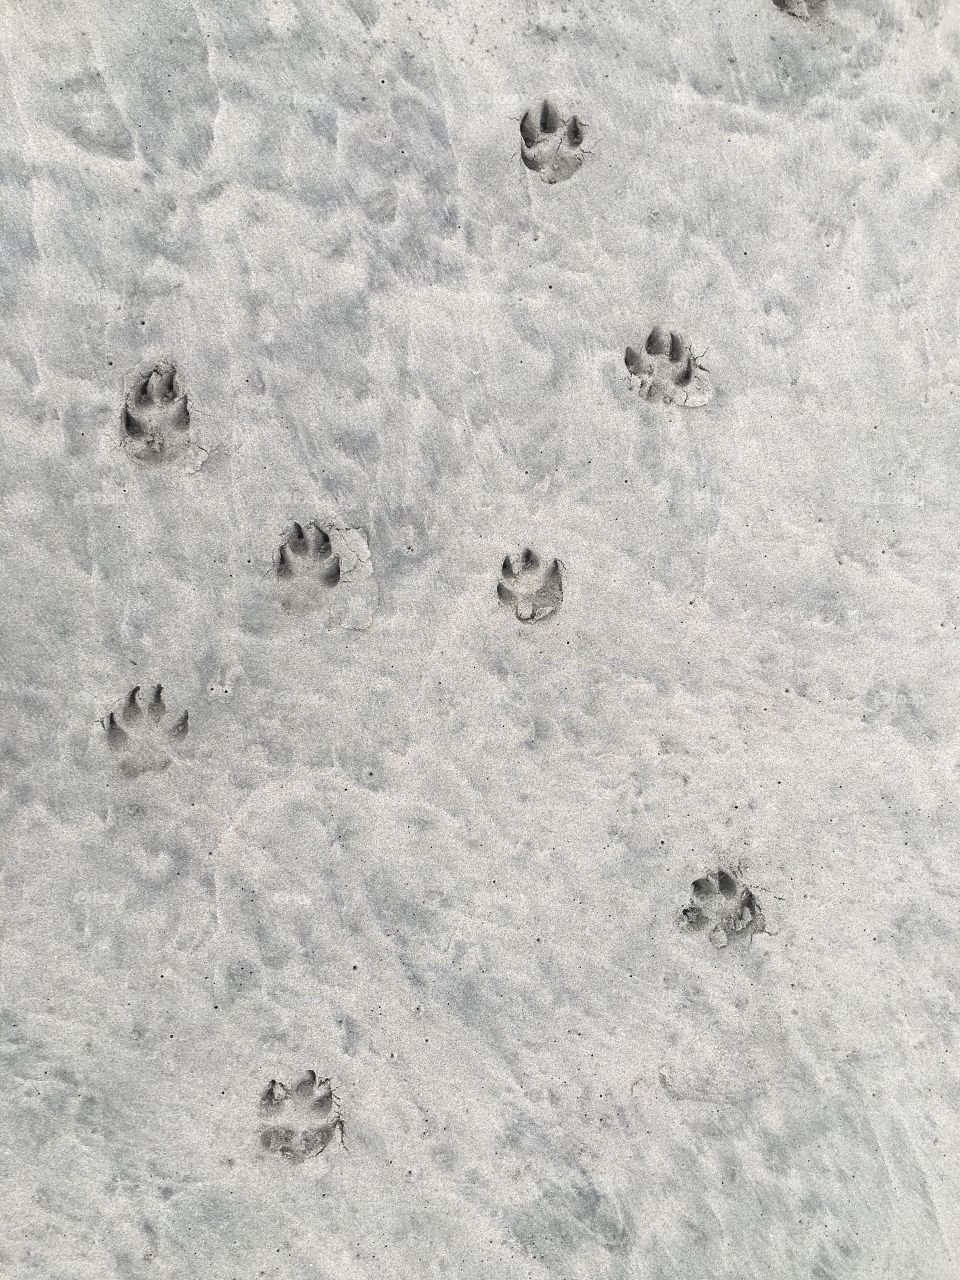 Footprint, No Person, Snow, Texture, Winter